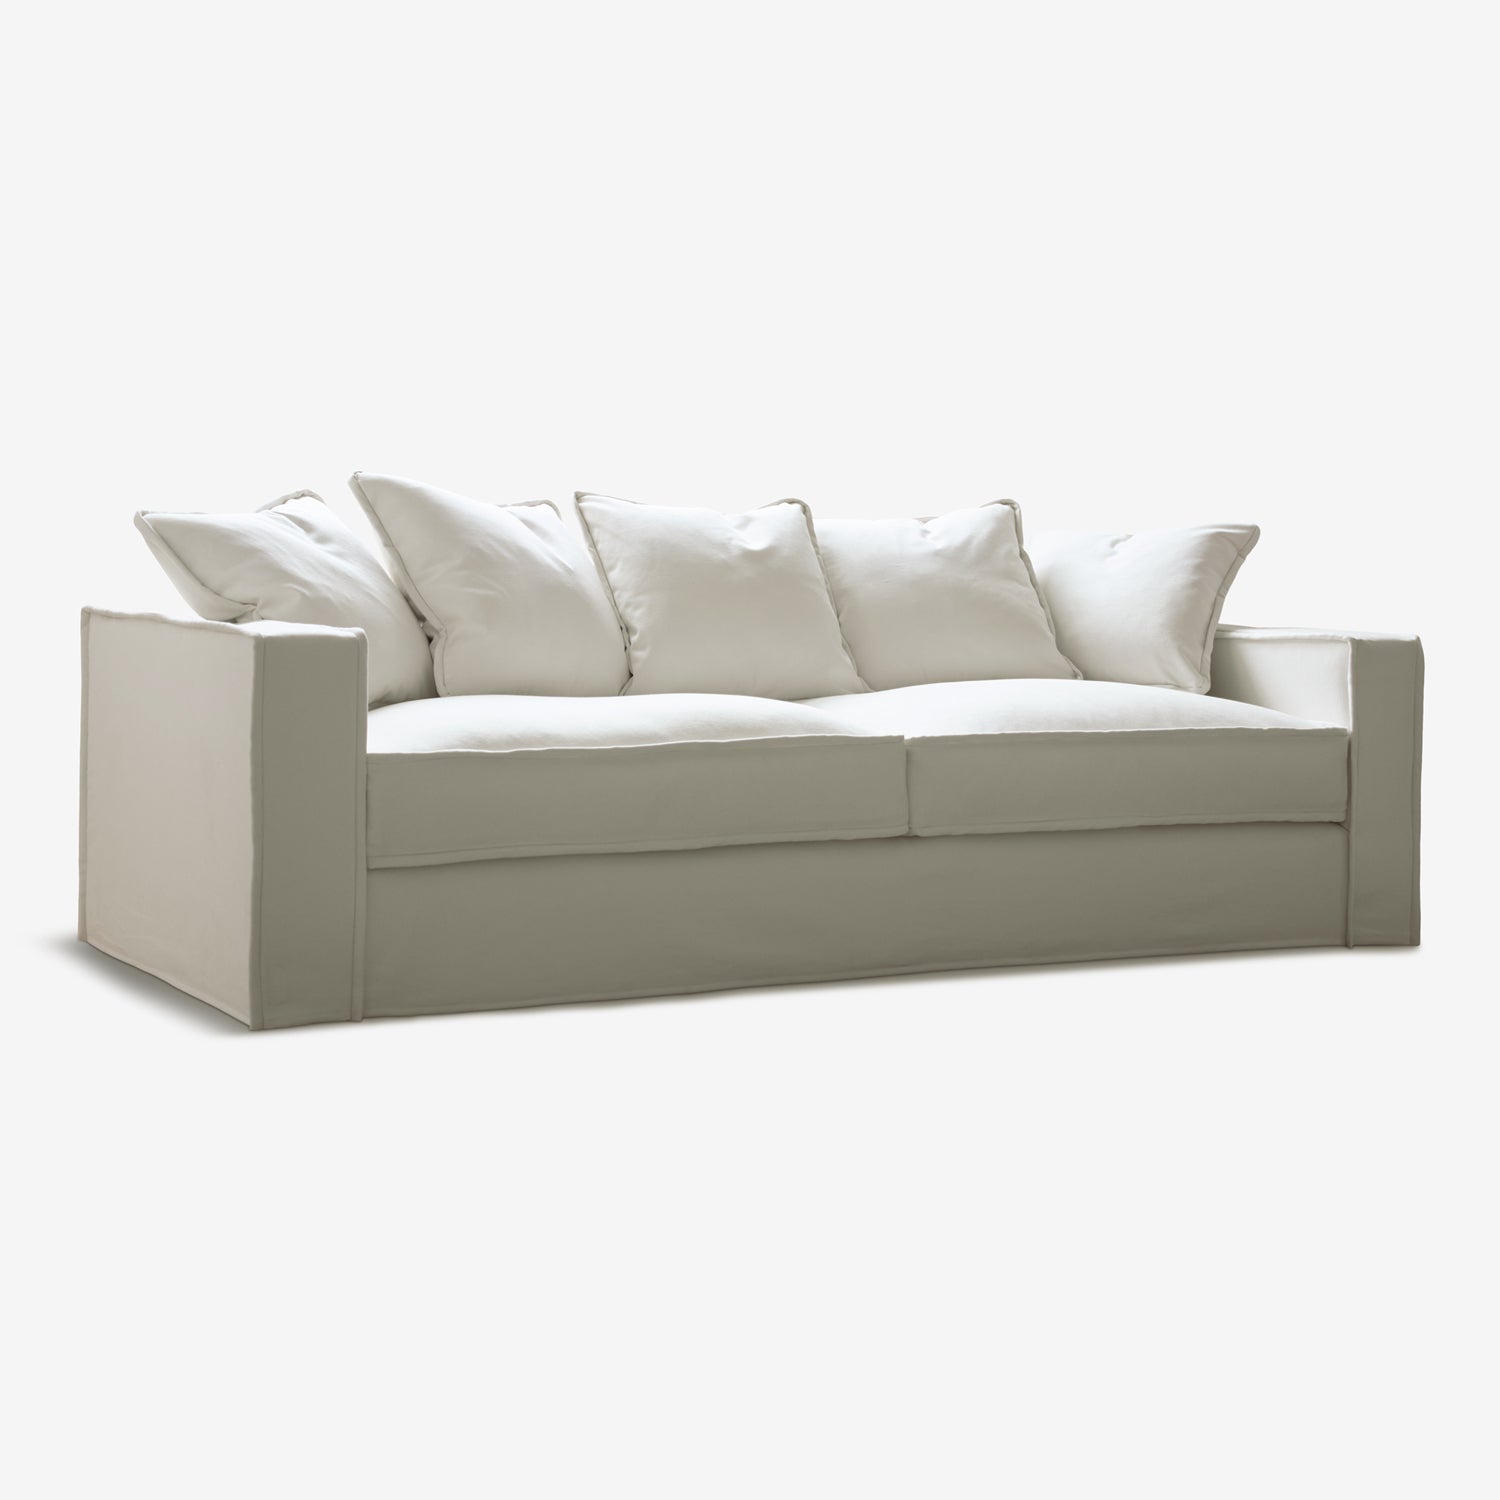 Chic Design with Plush Cushions. Cream white sustainable sofa.